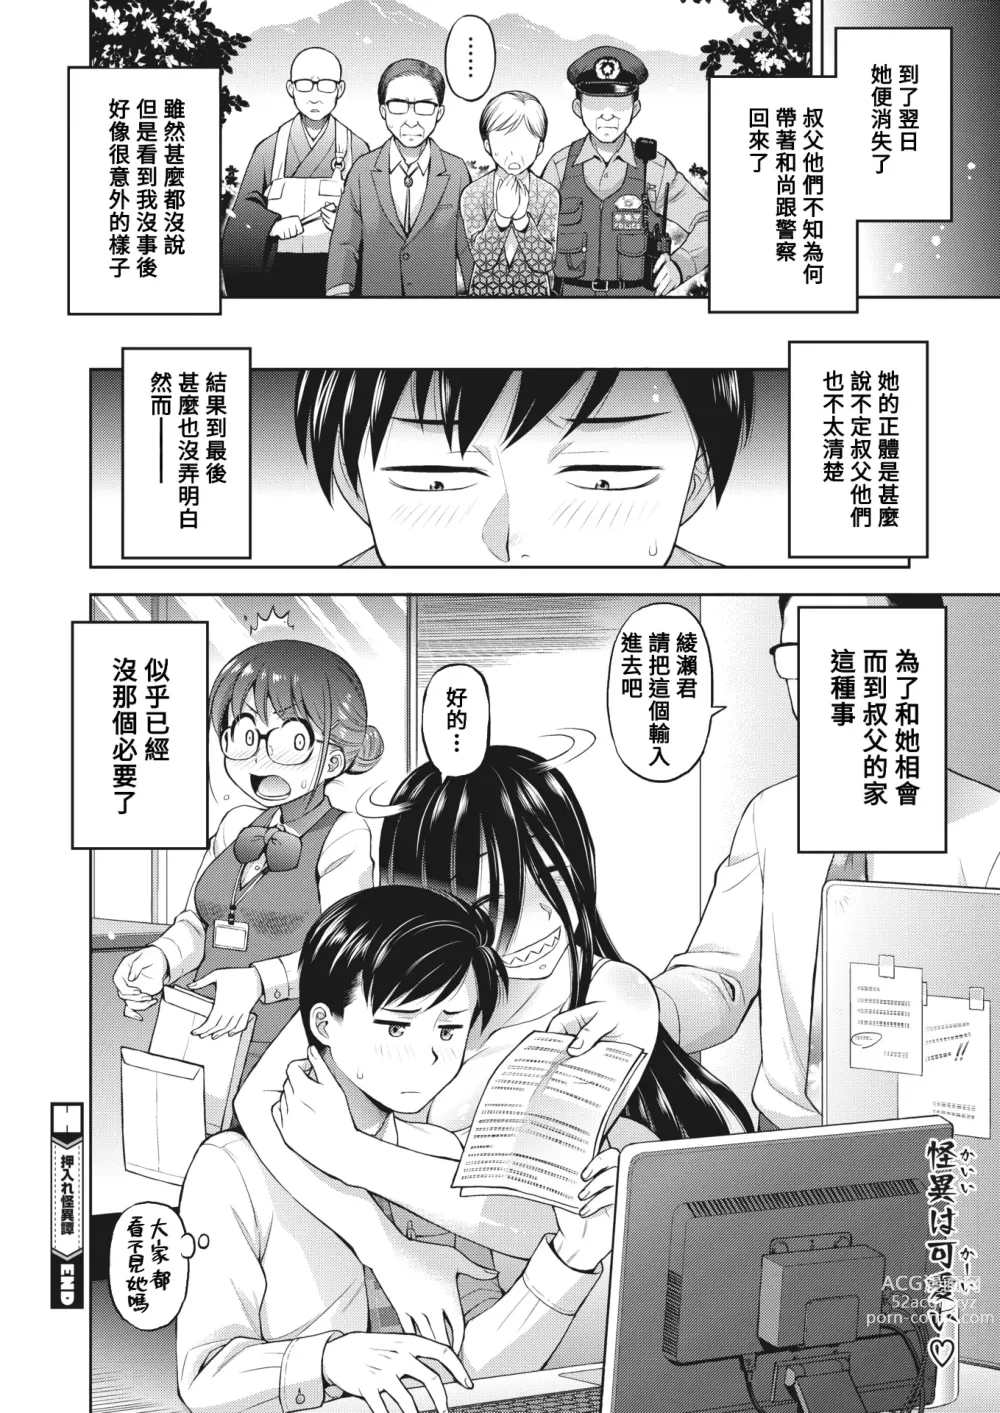 Page 22 of manga Oshiire Kaikitan